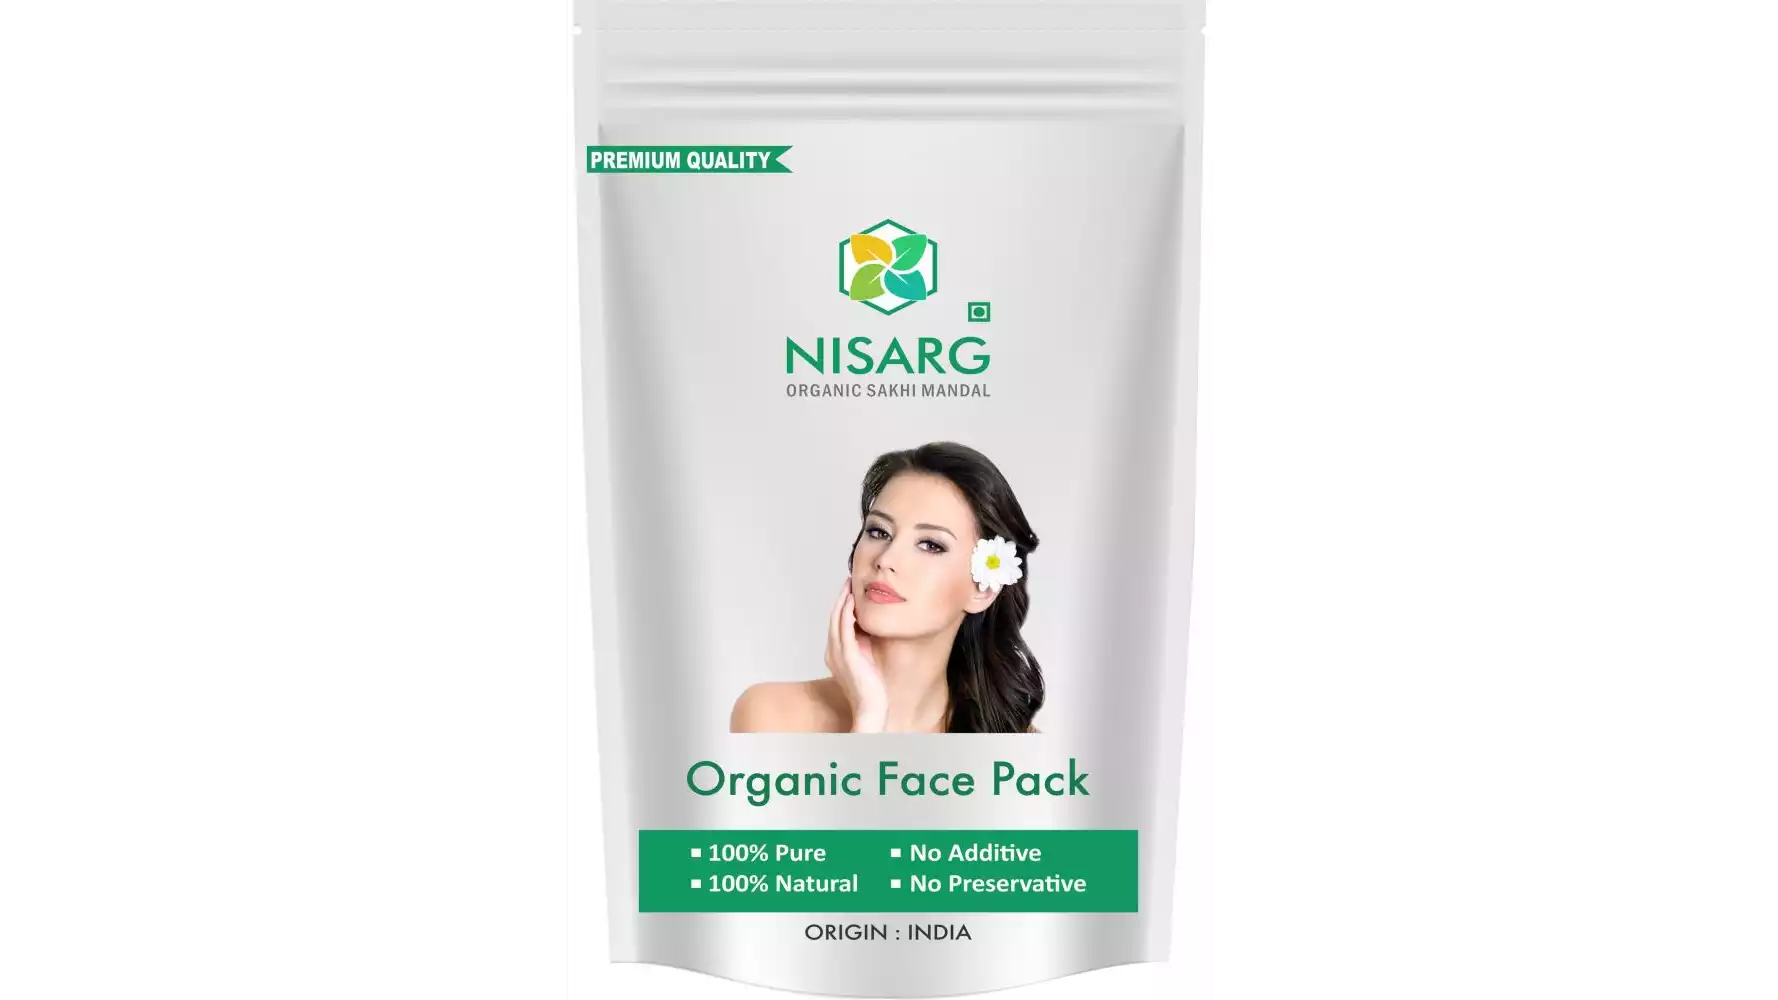 Nisarg Organic Farm Organic Face Pack (500g)